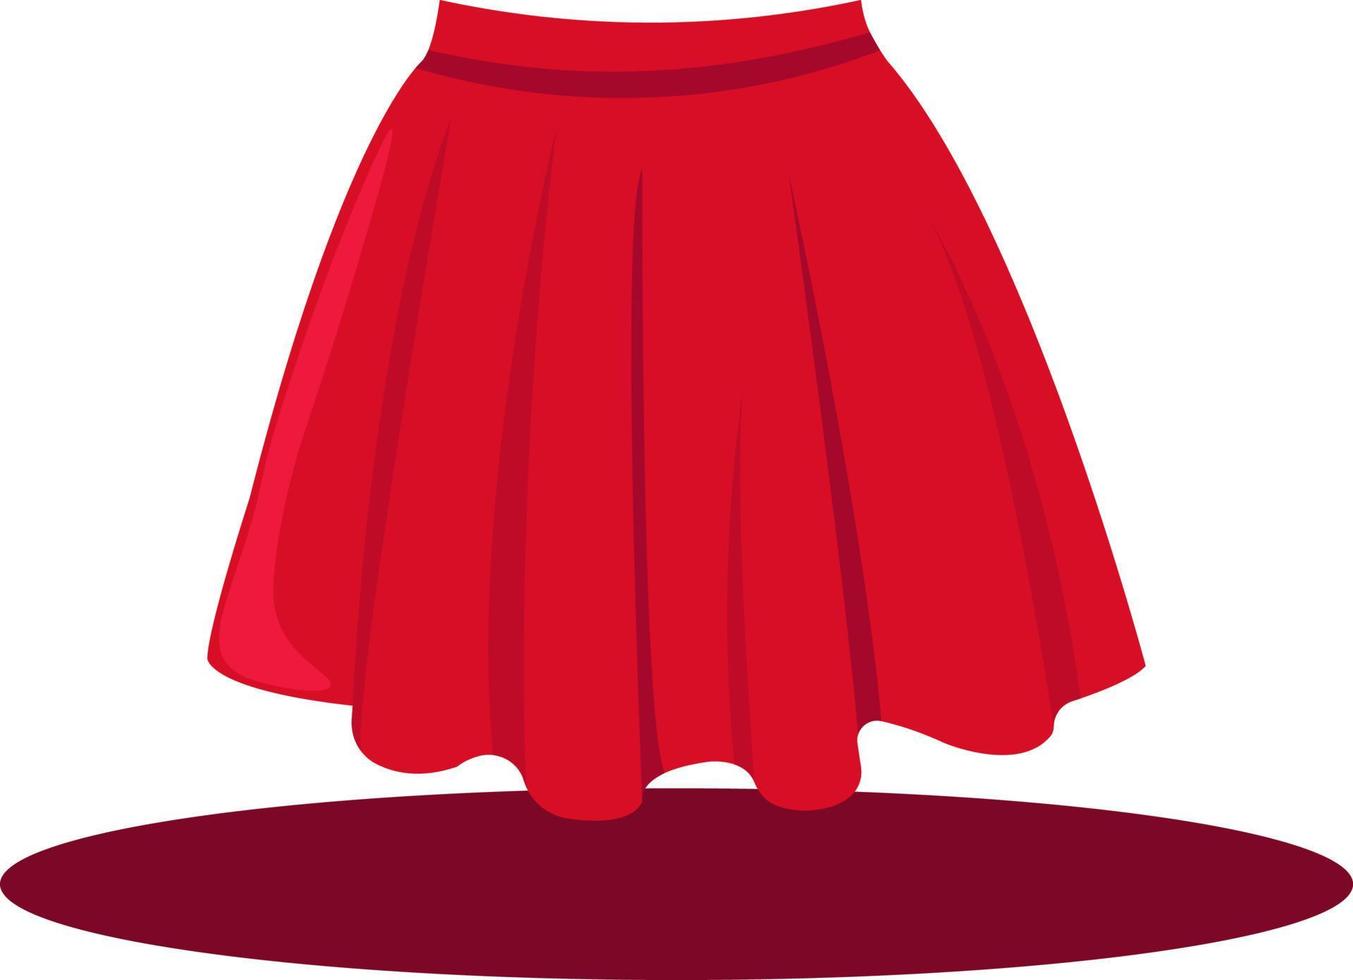 red woman skirt, illustration, vector on white background.